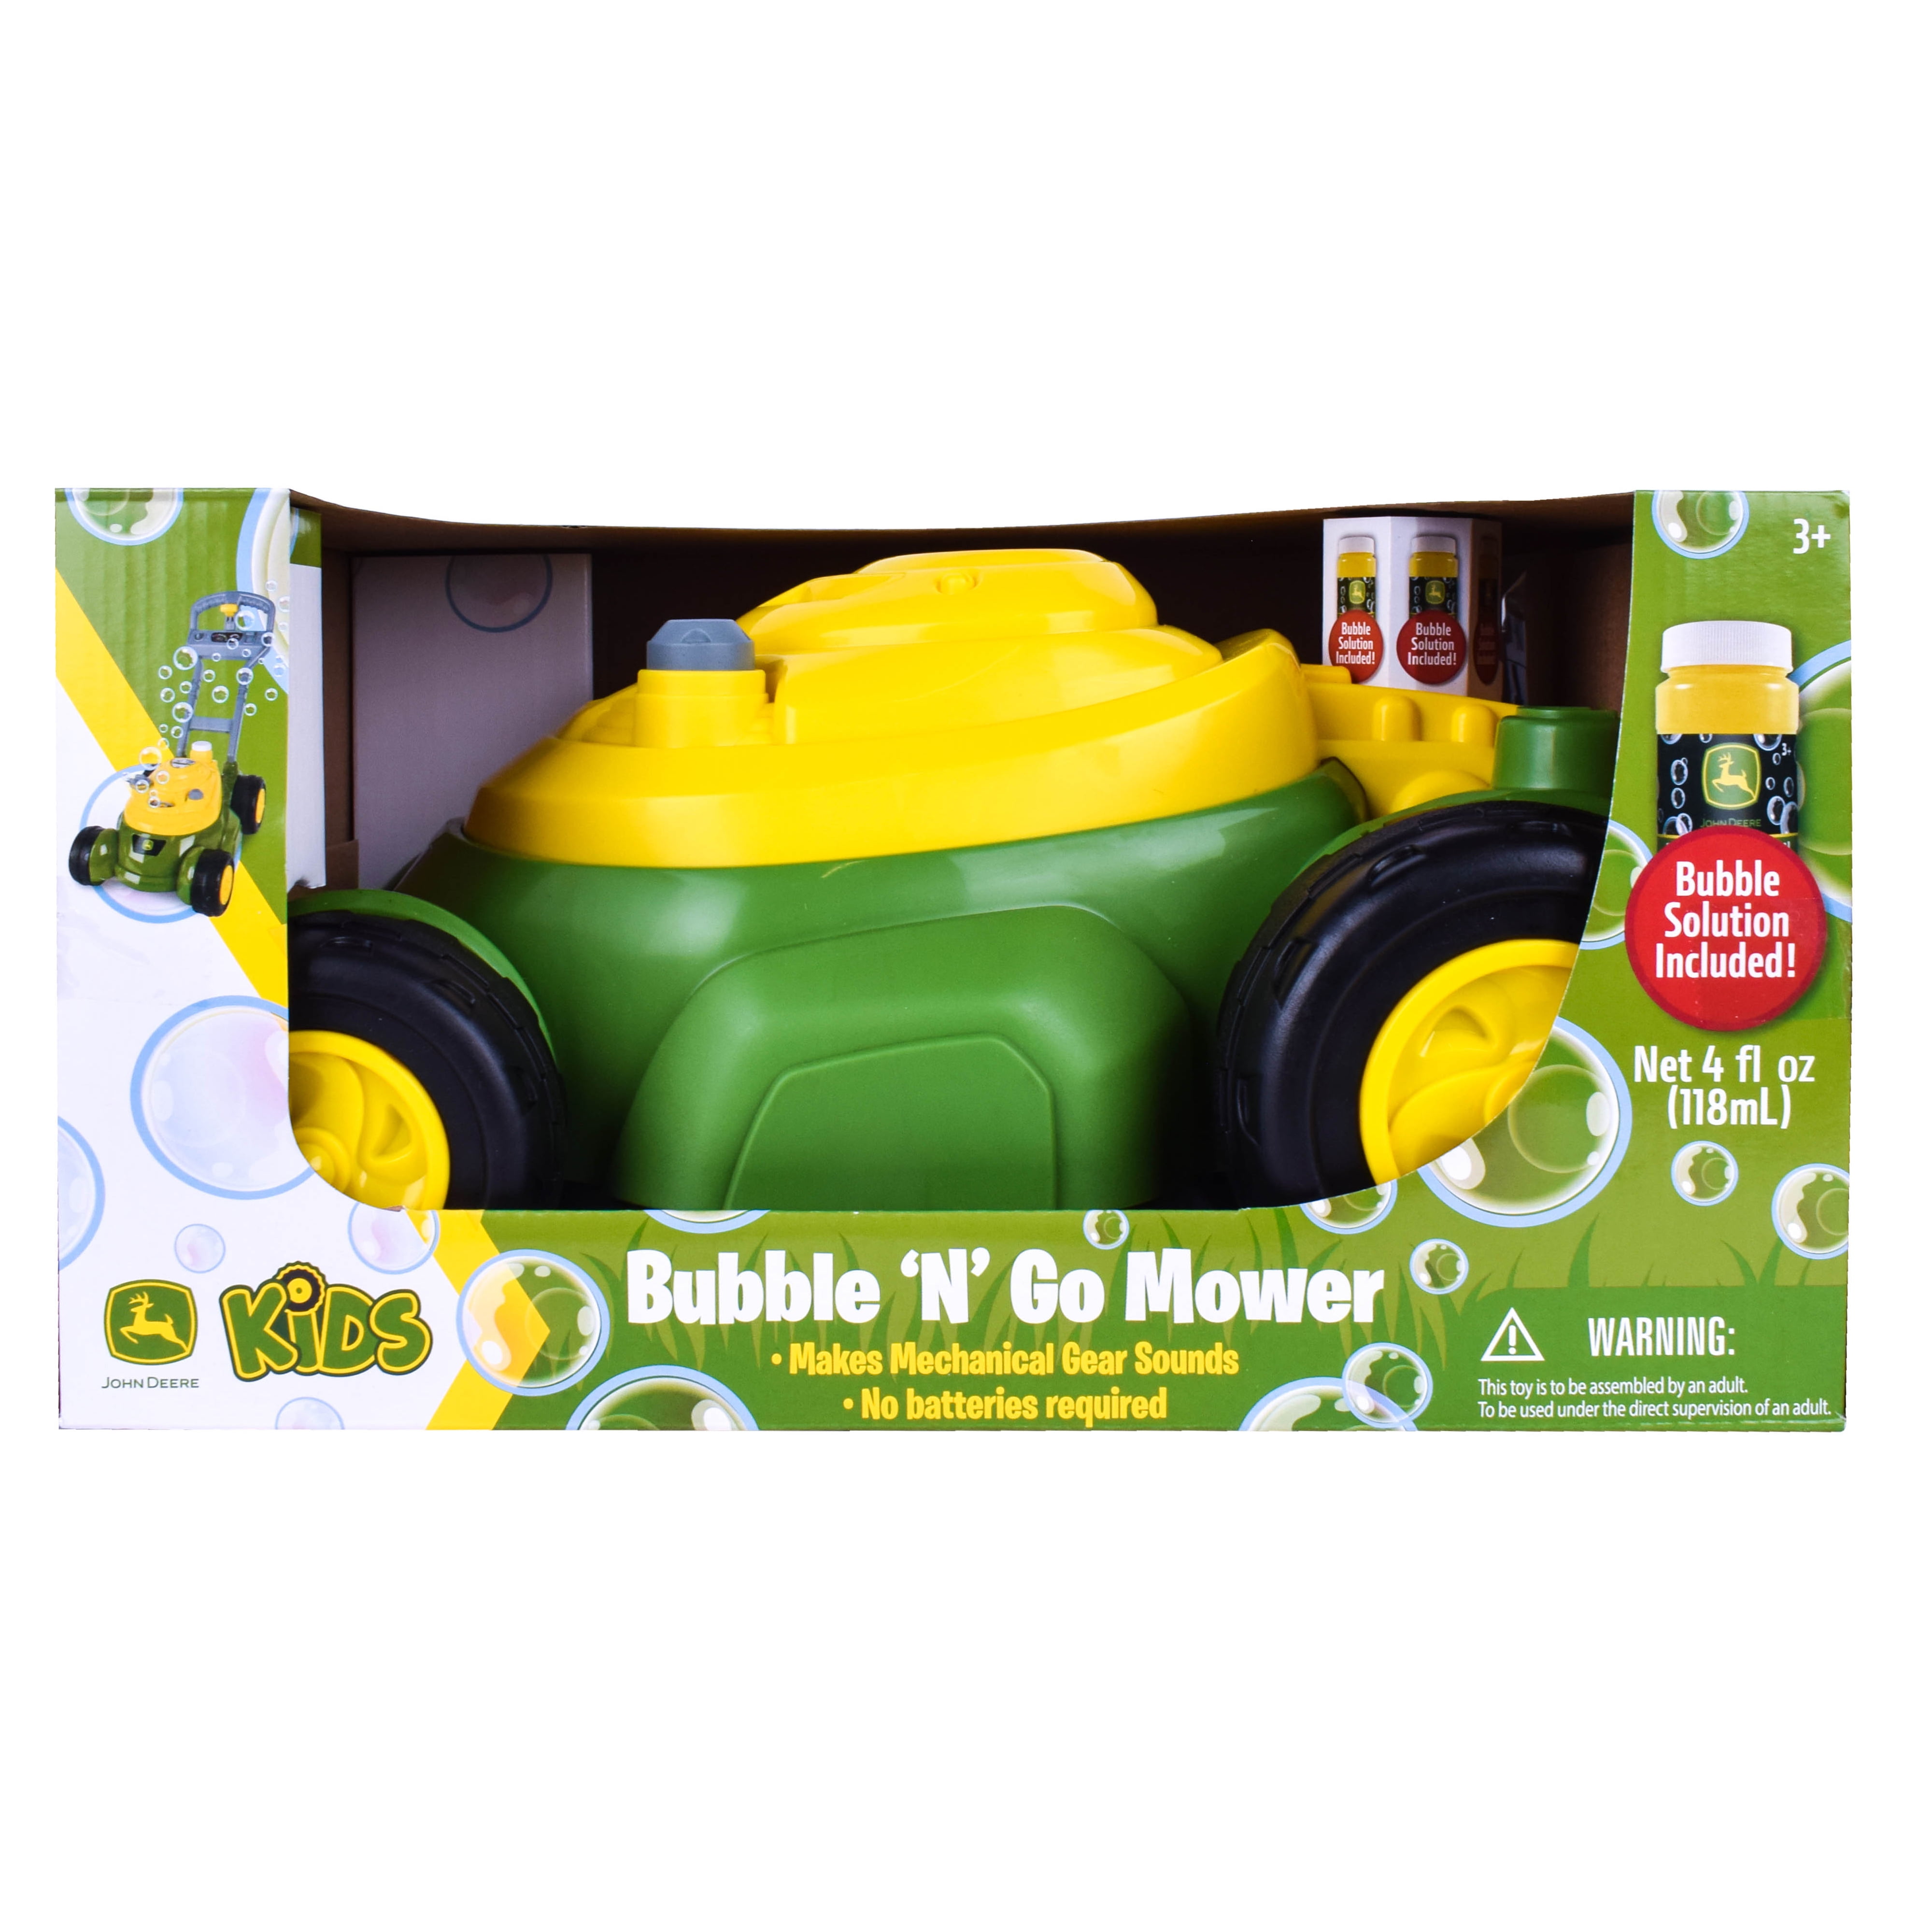 The John Deere Bubble Mower